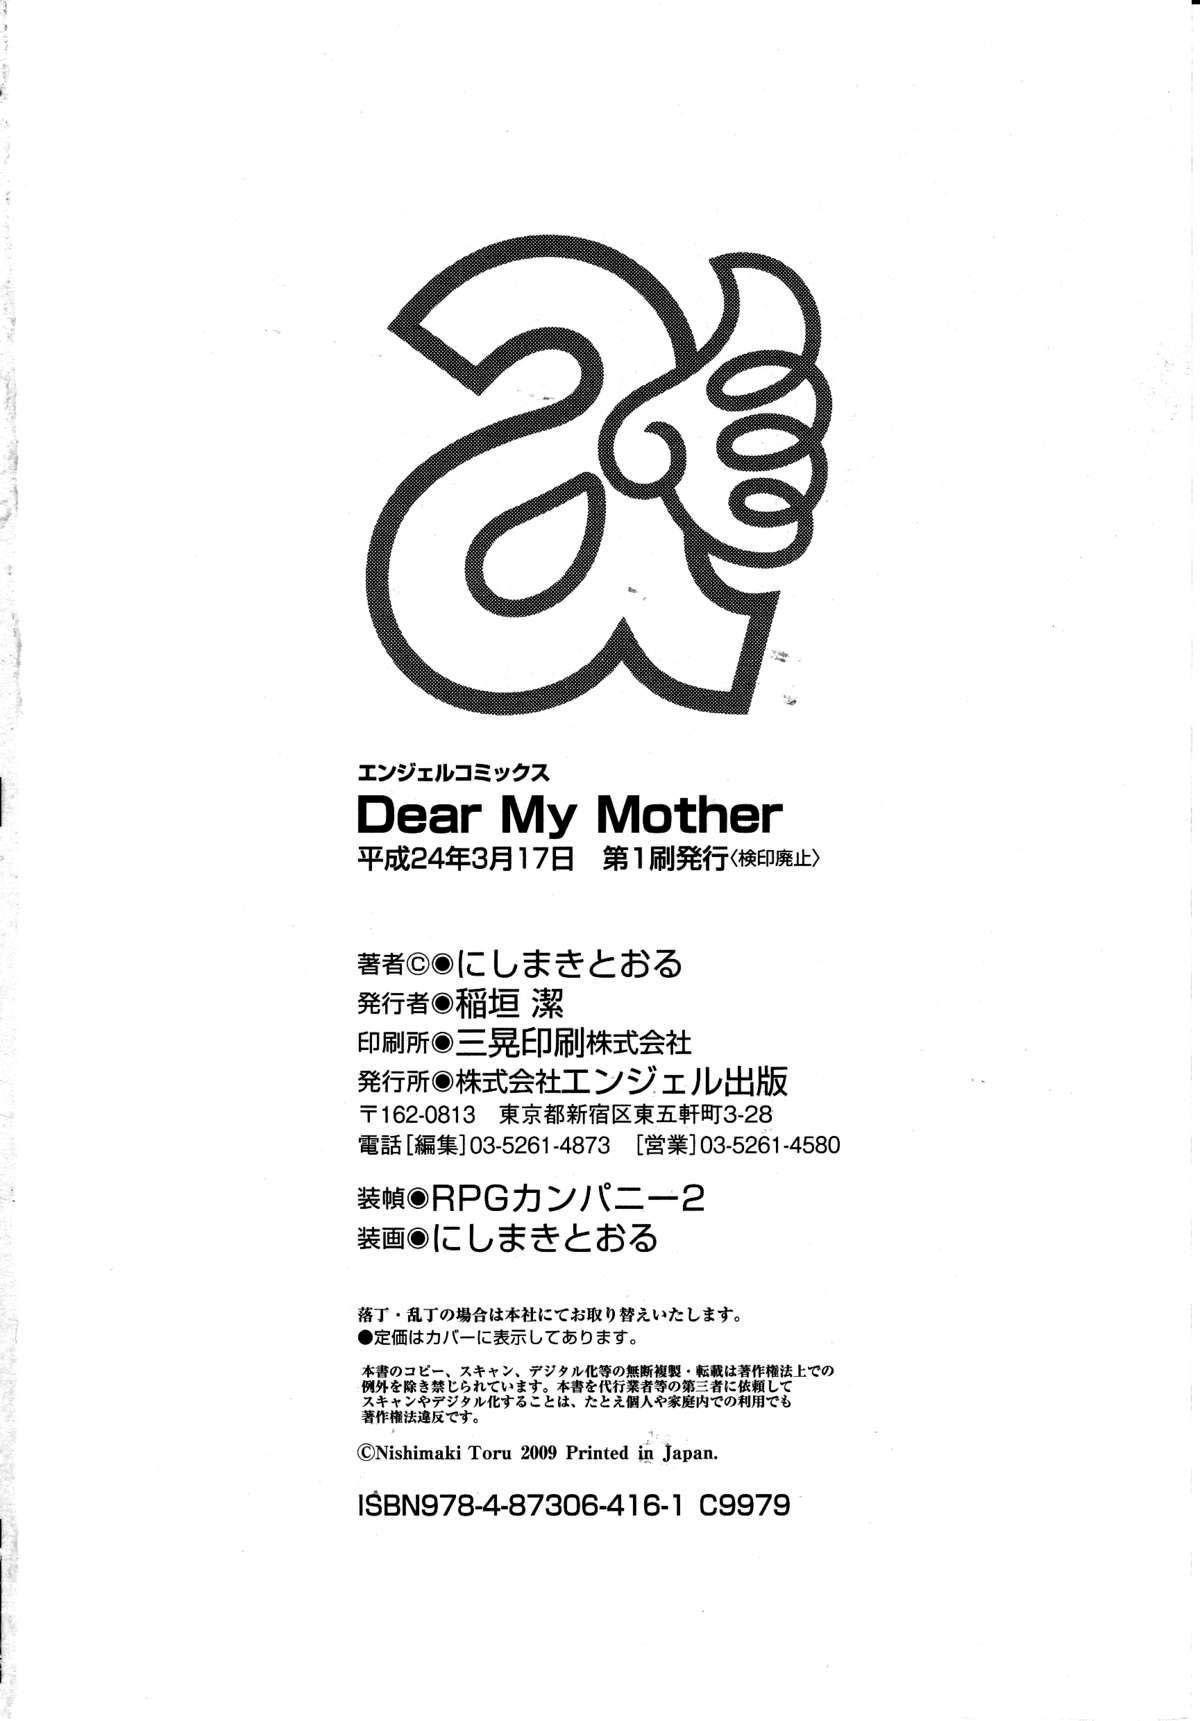 MY DEAR MOM (3PARTE) - 56